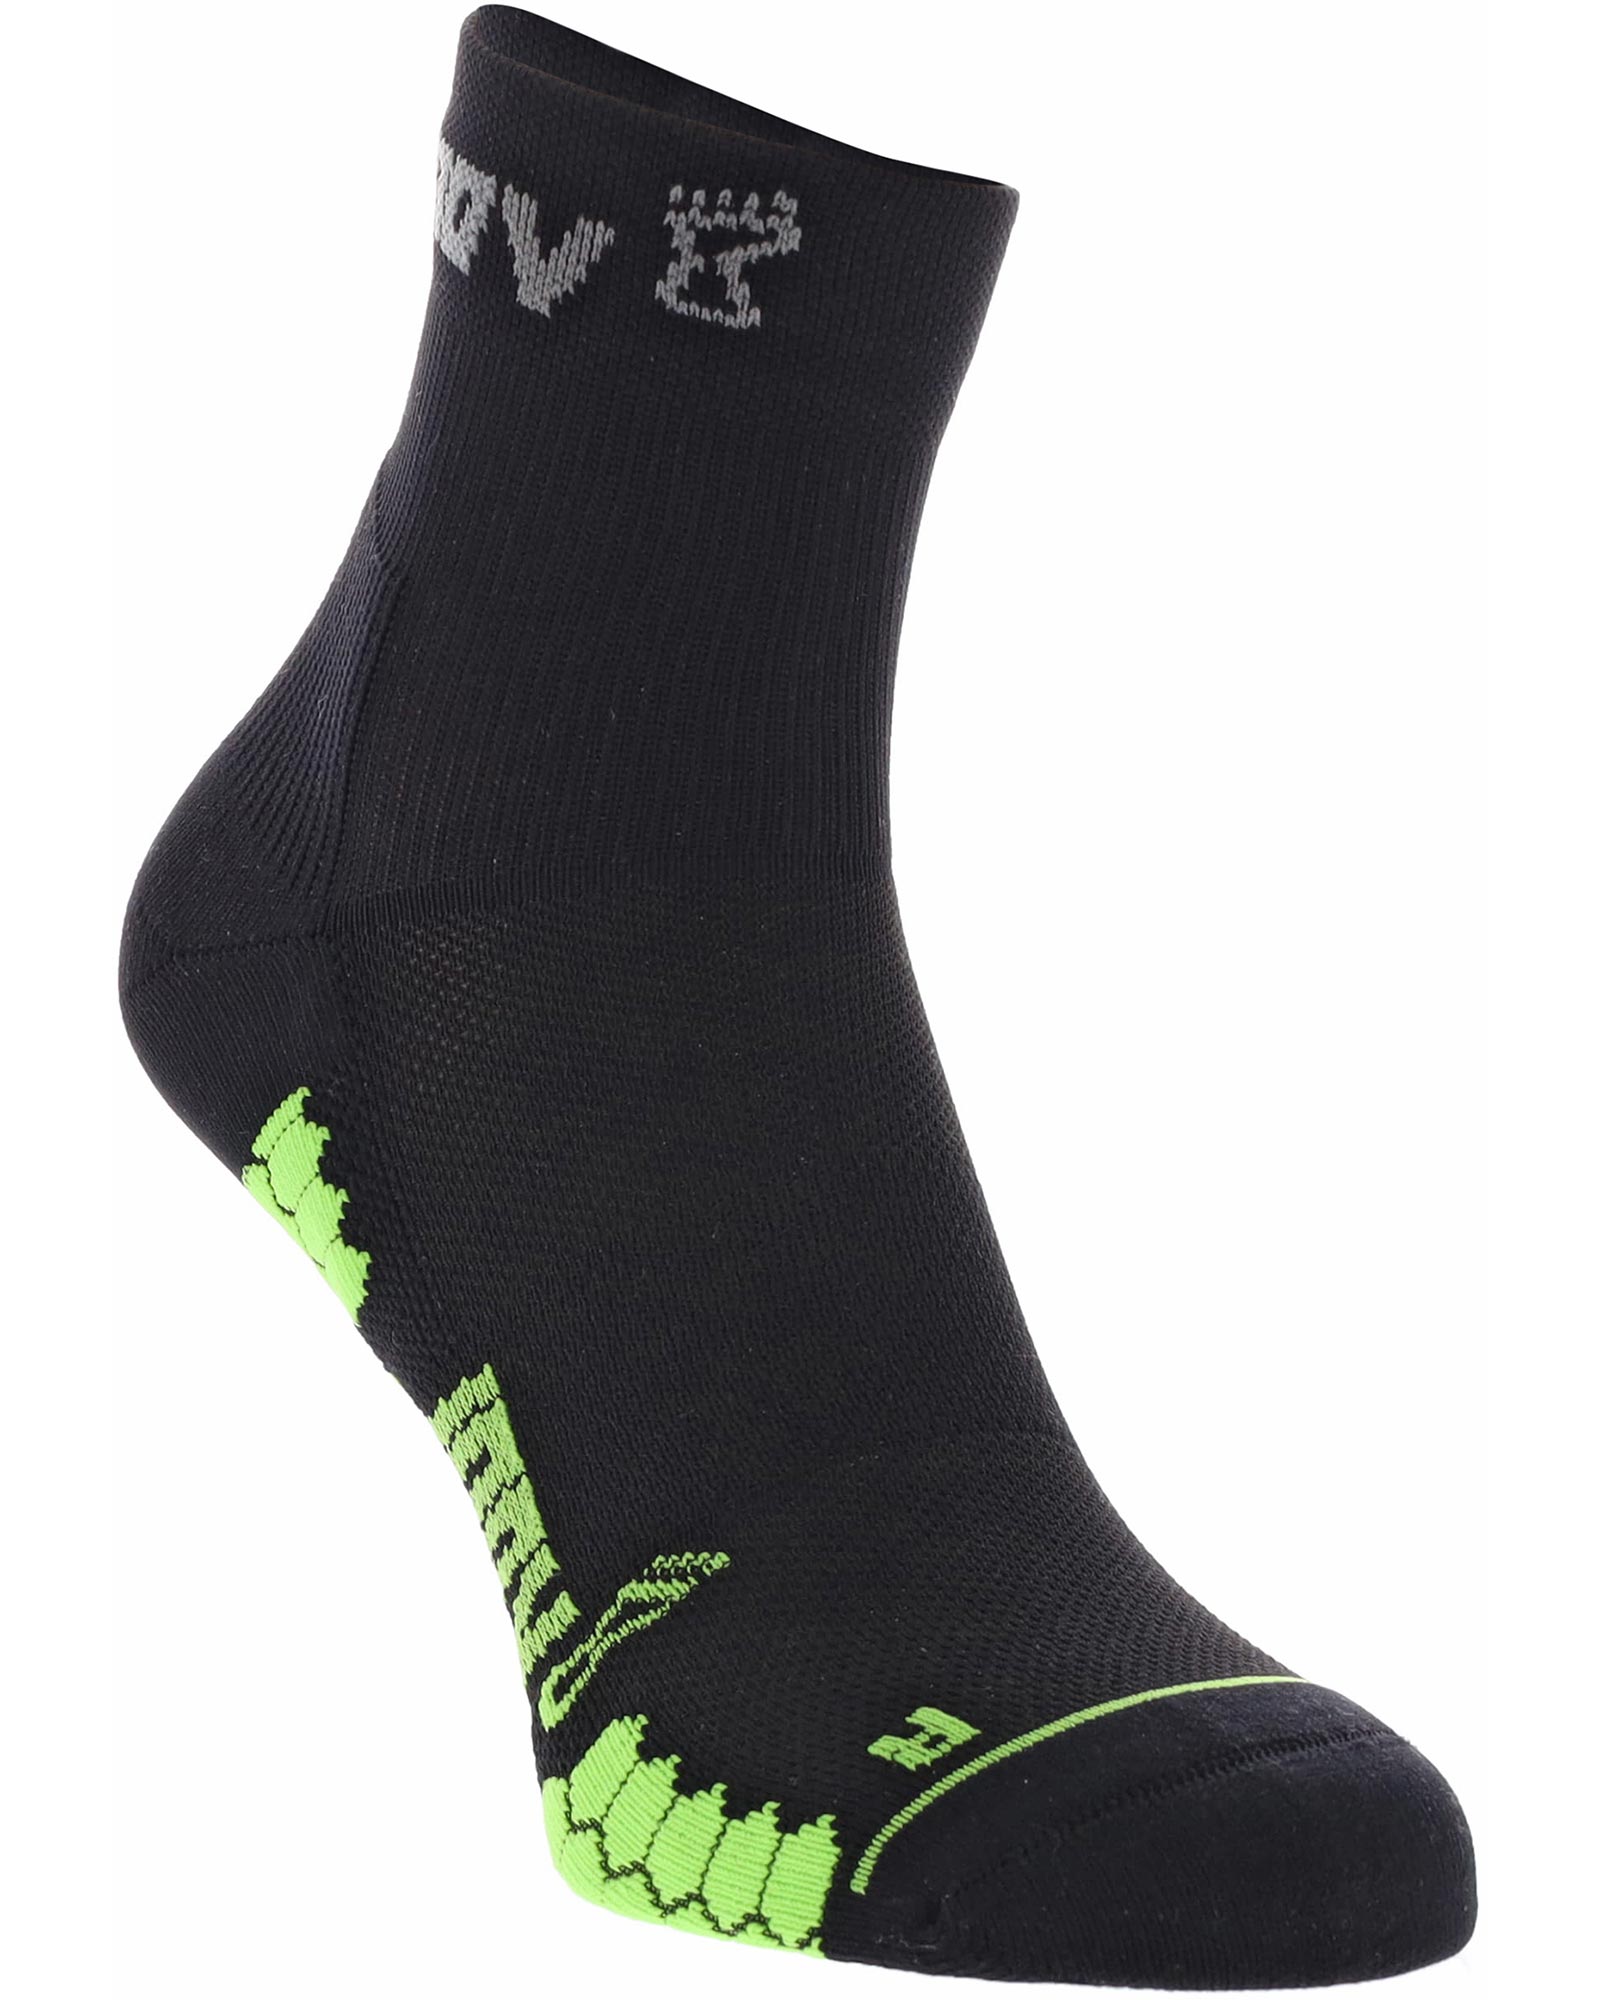 Inov 8 Trailfly Mid Socks - Black/Green S